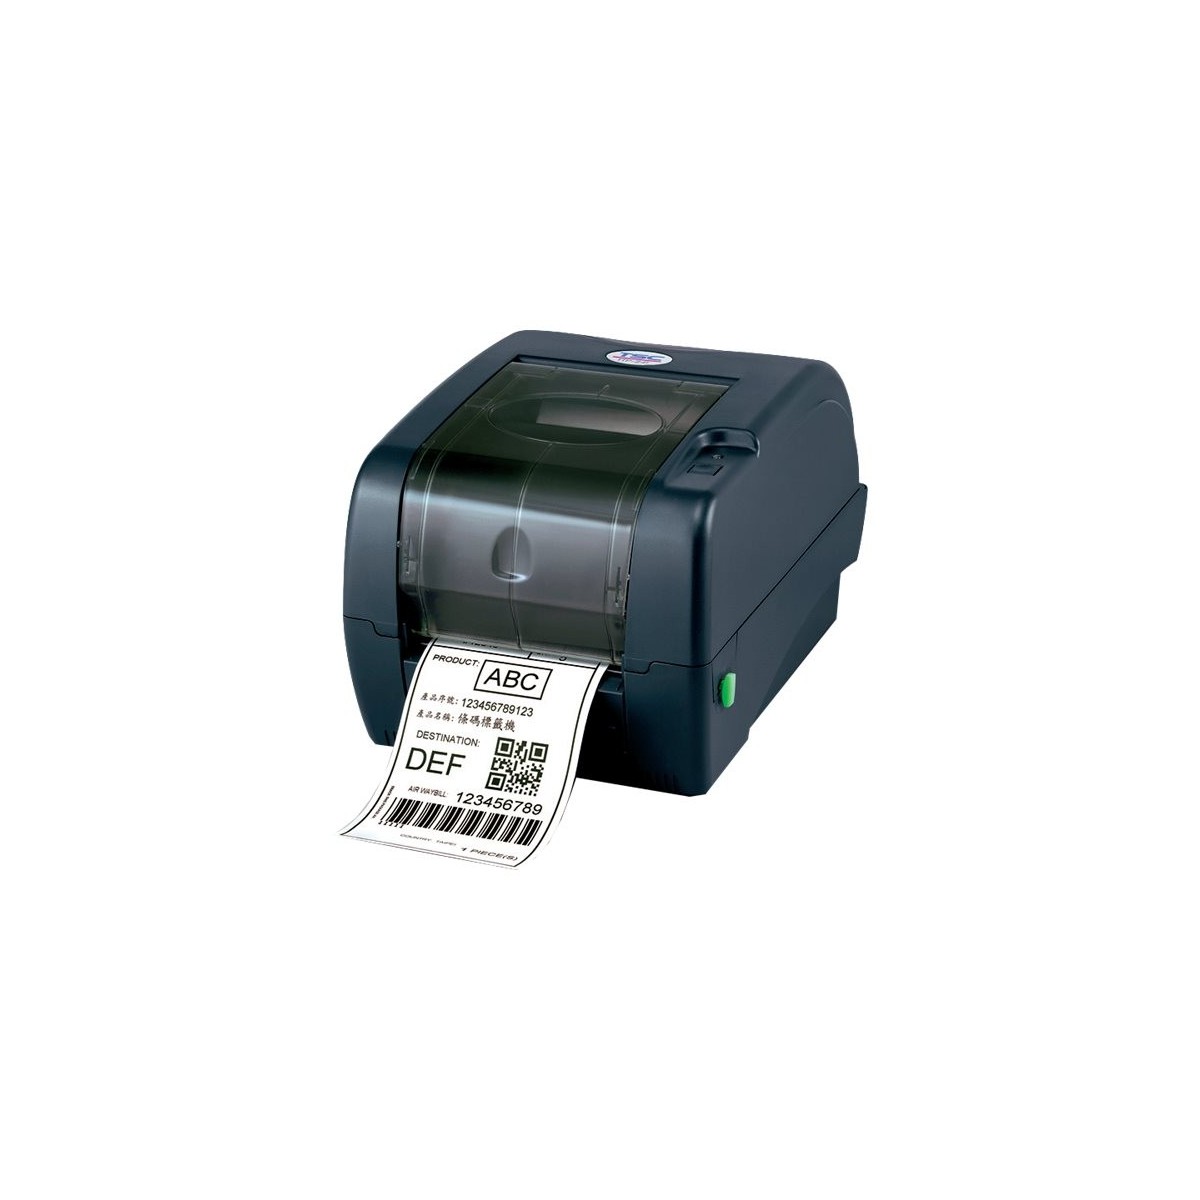 TSC TTP-247 203dpi Multi-IF LAN - Label Printer - Label Printer